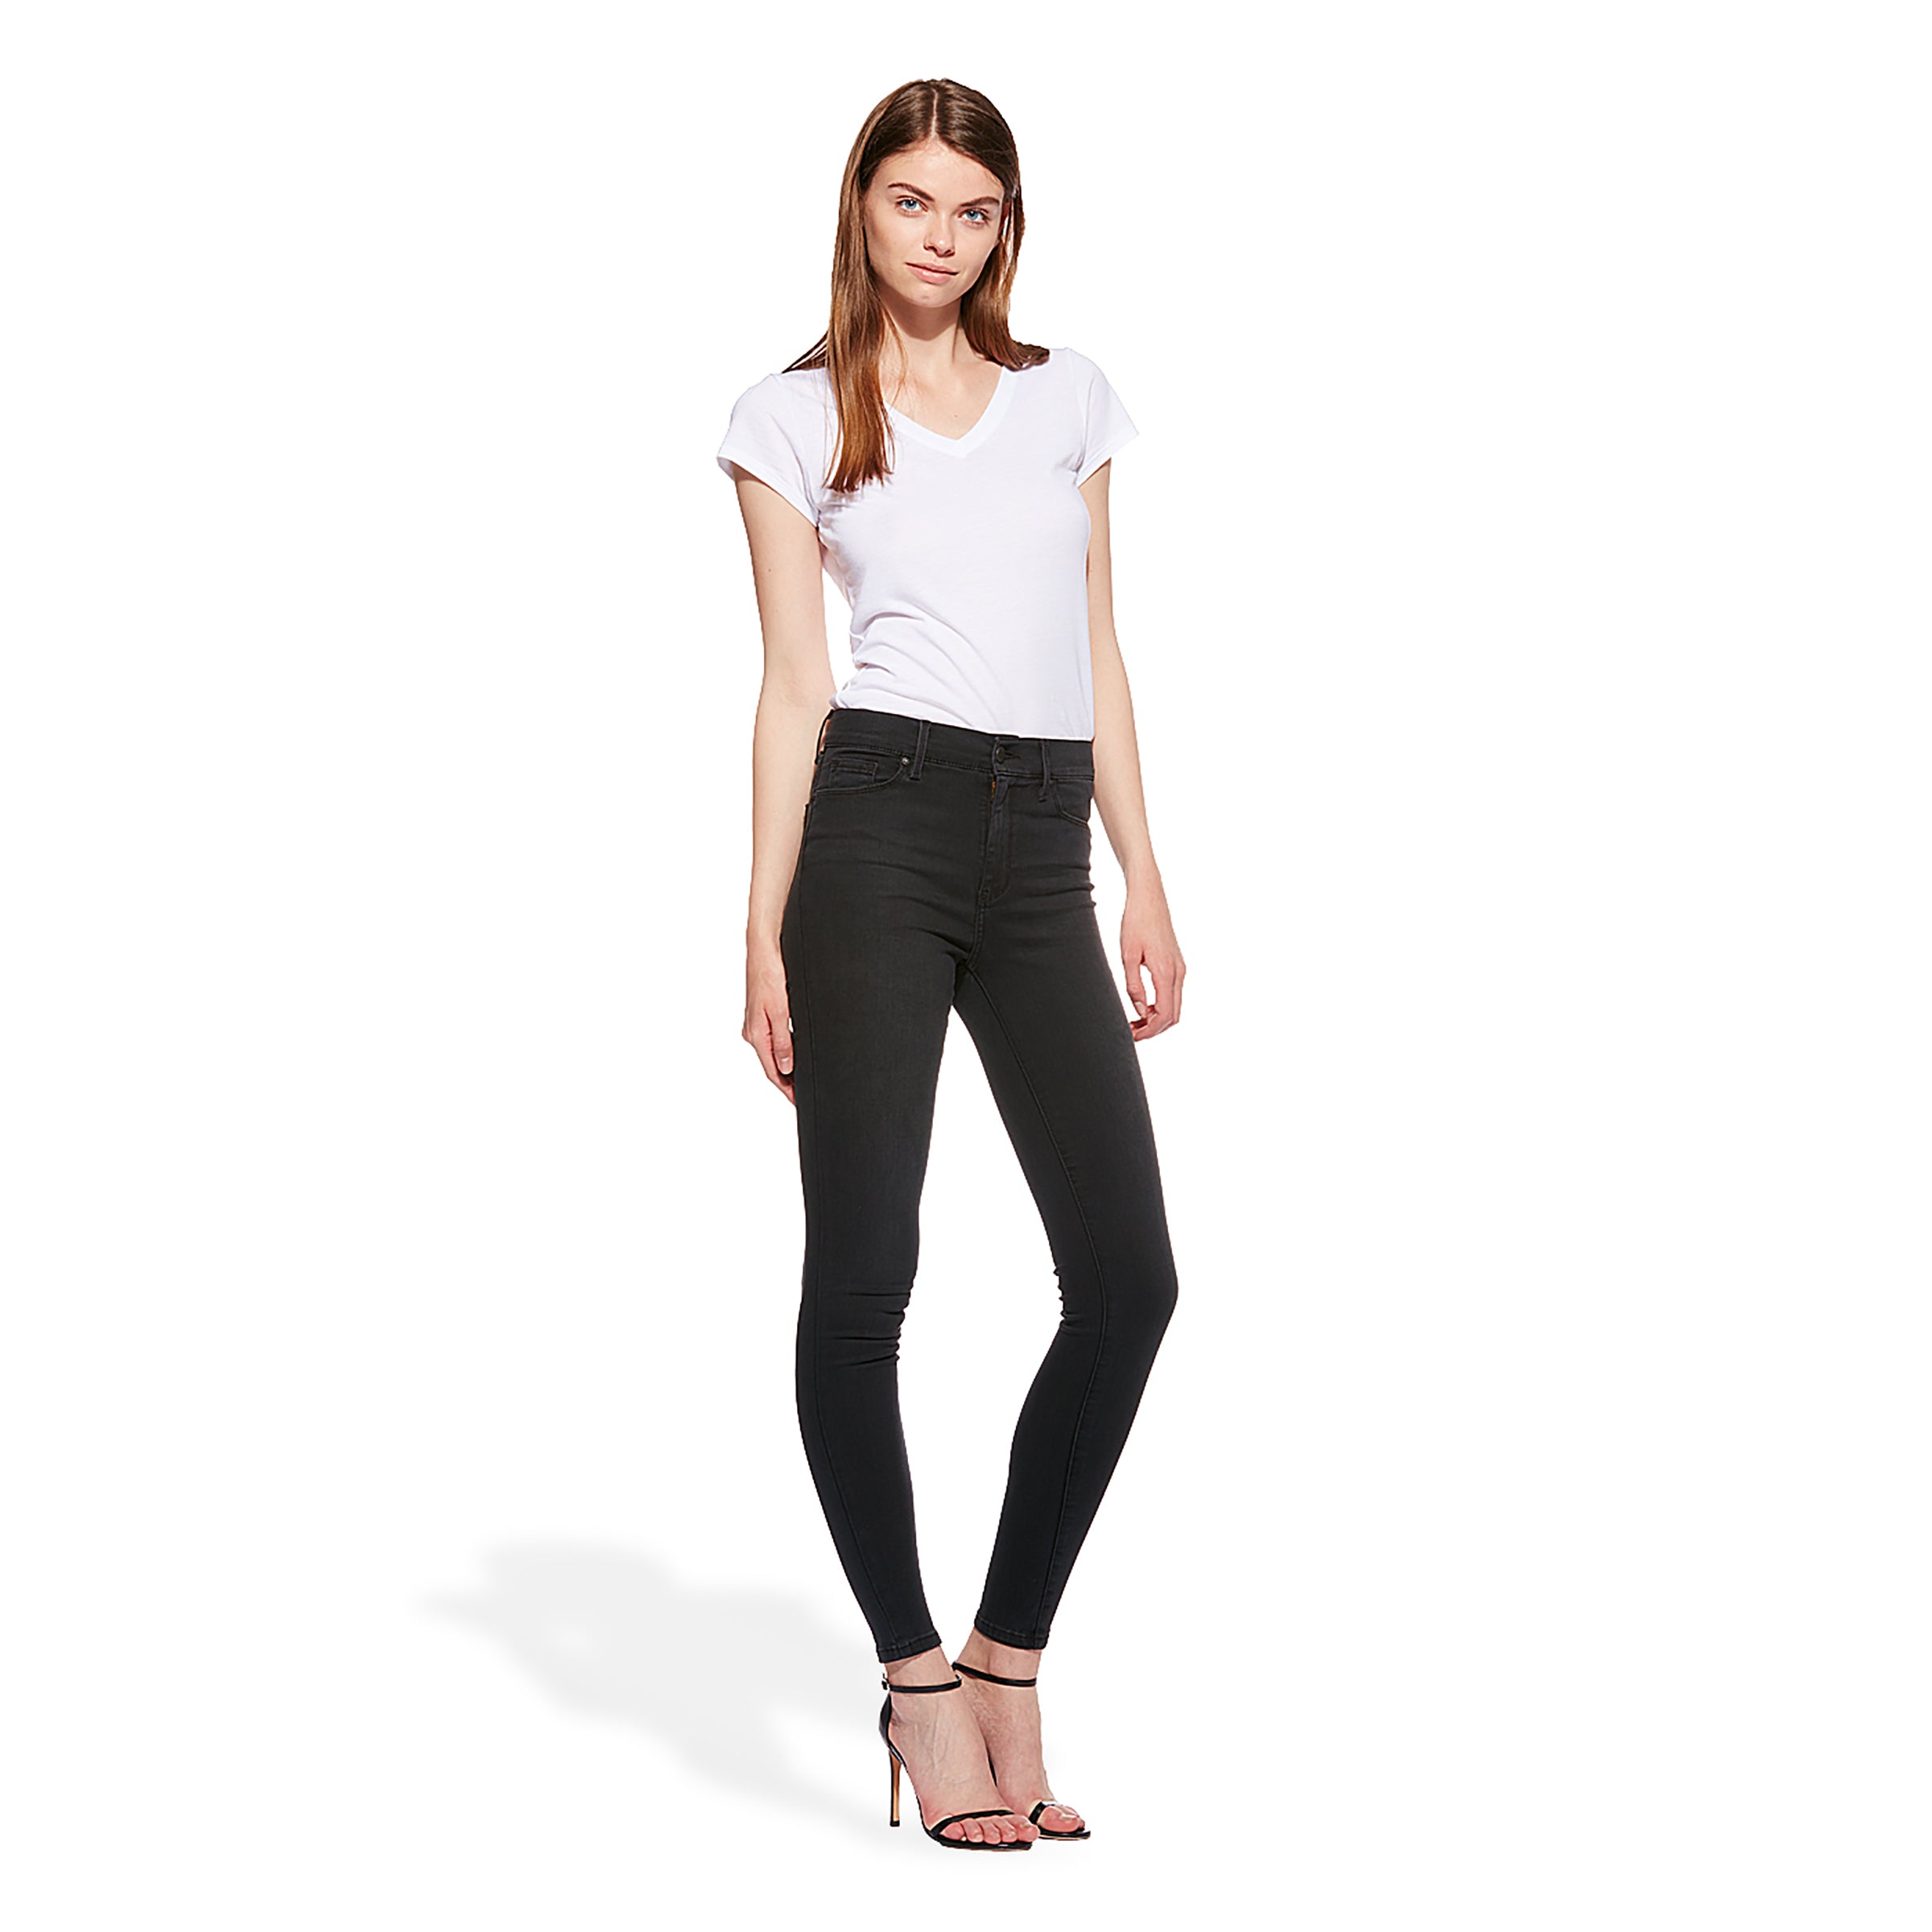 Women wearing Gris foncé High Rise Skinny Orchard Jeans